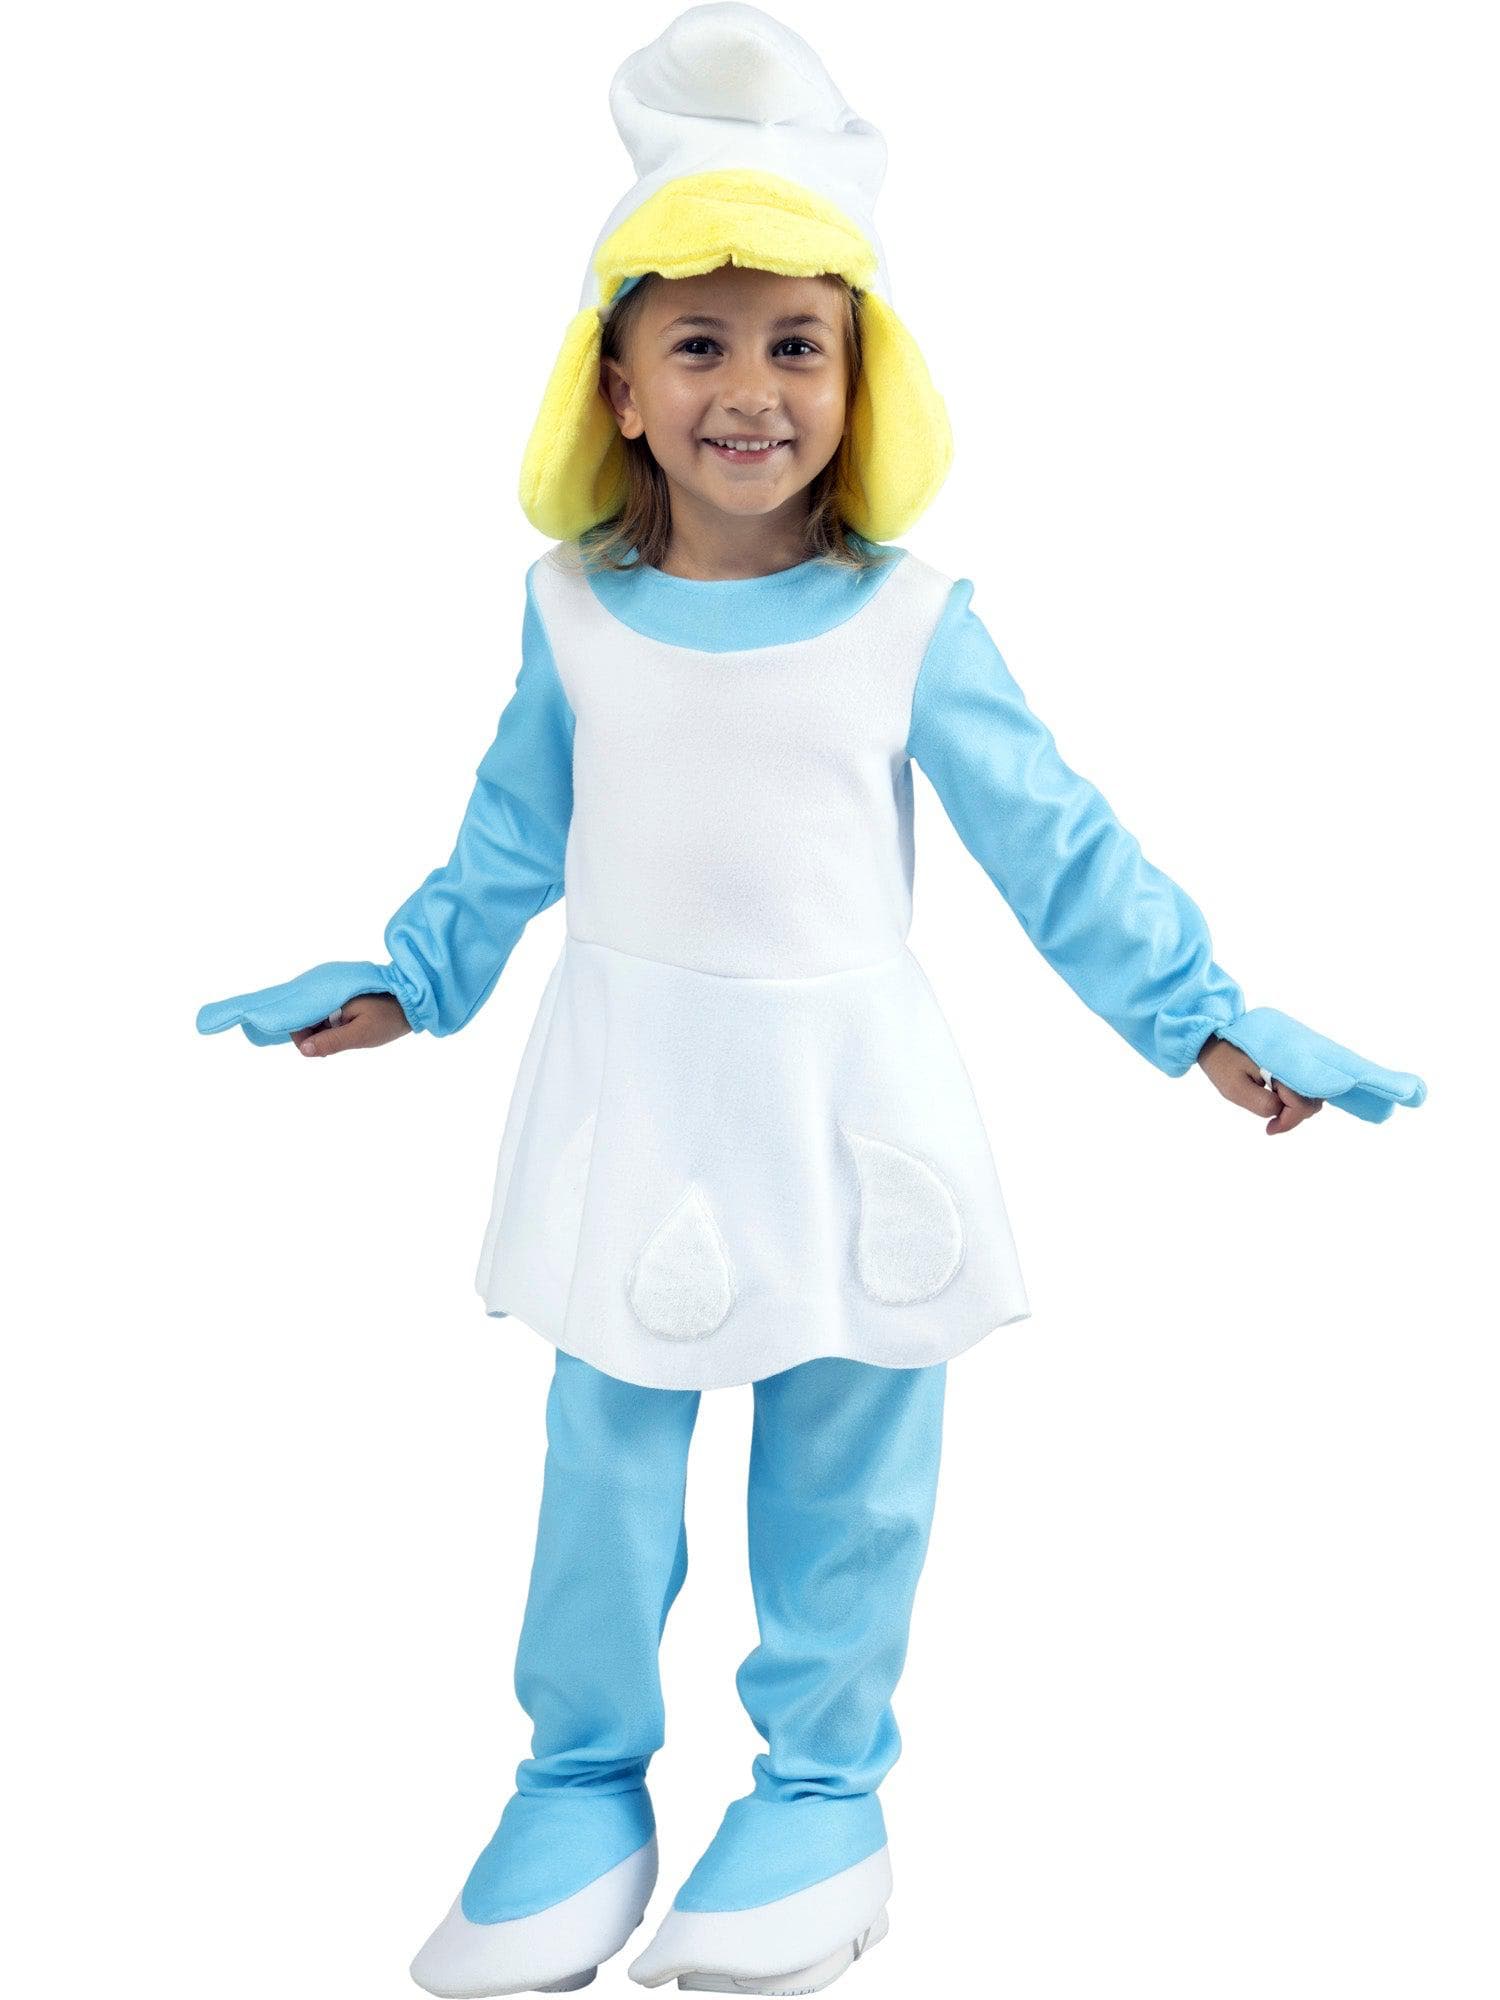 The Smurfs Smurfette Toddler Costume - costumes.com